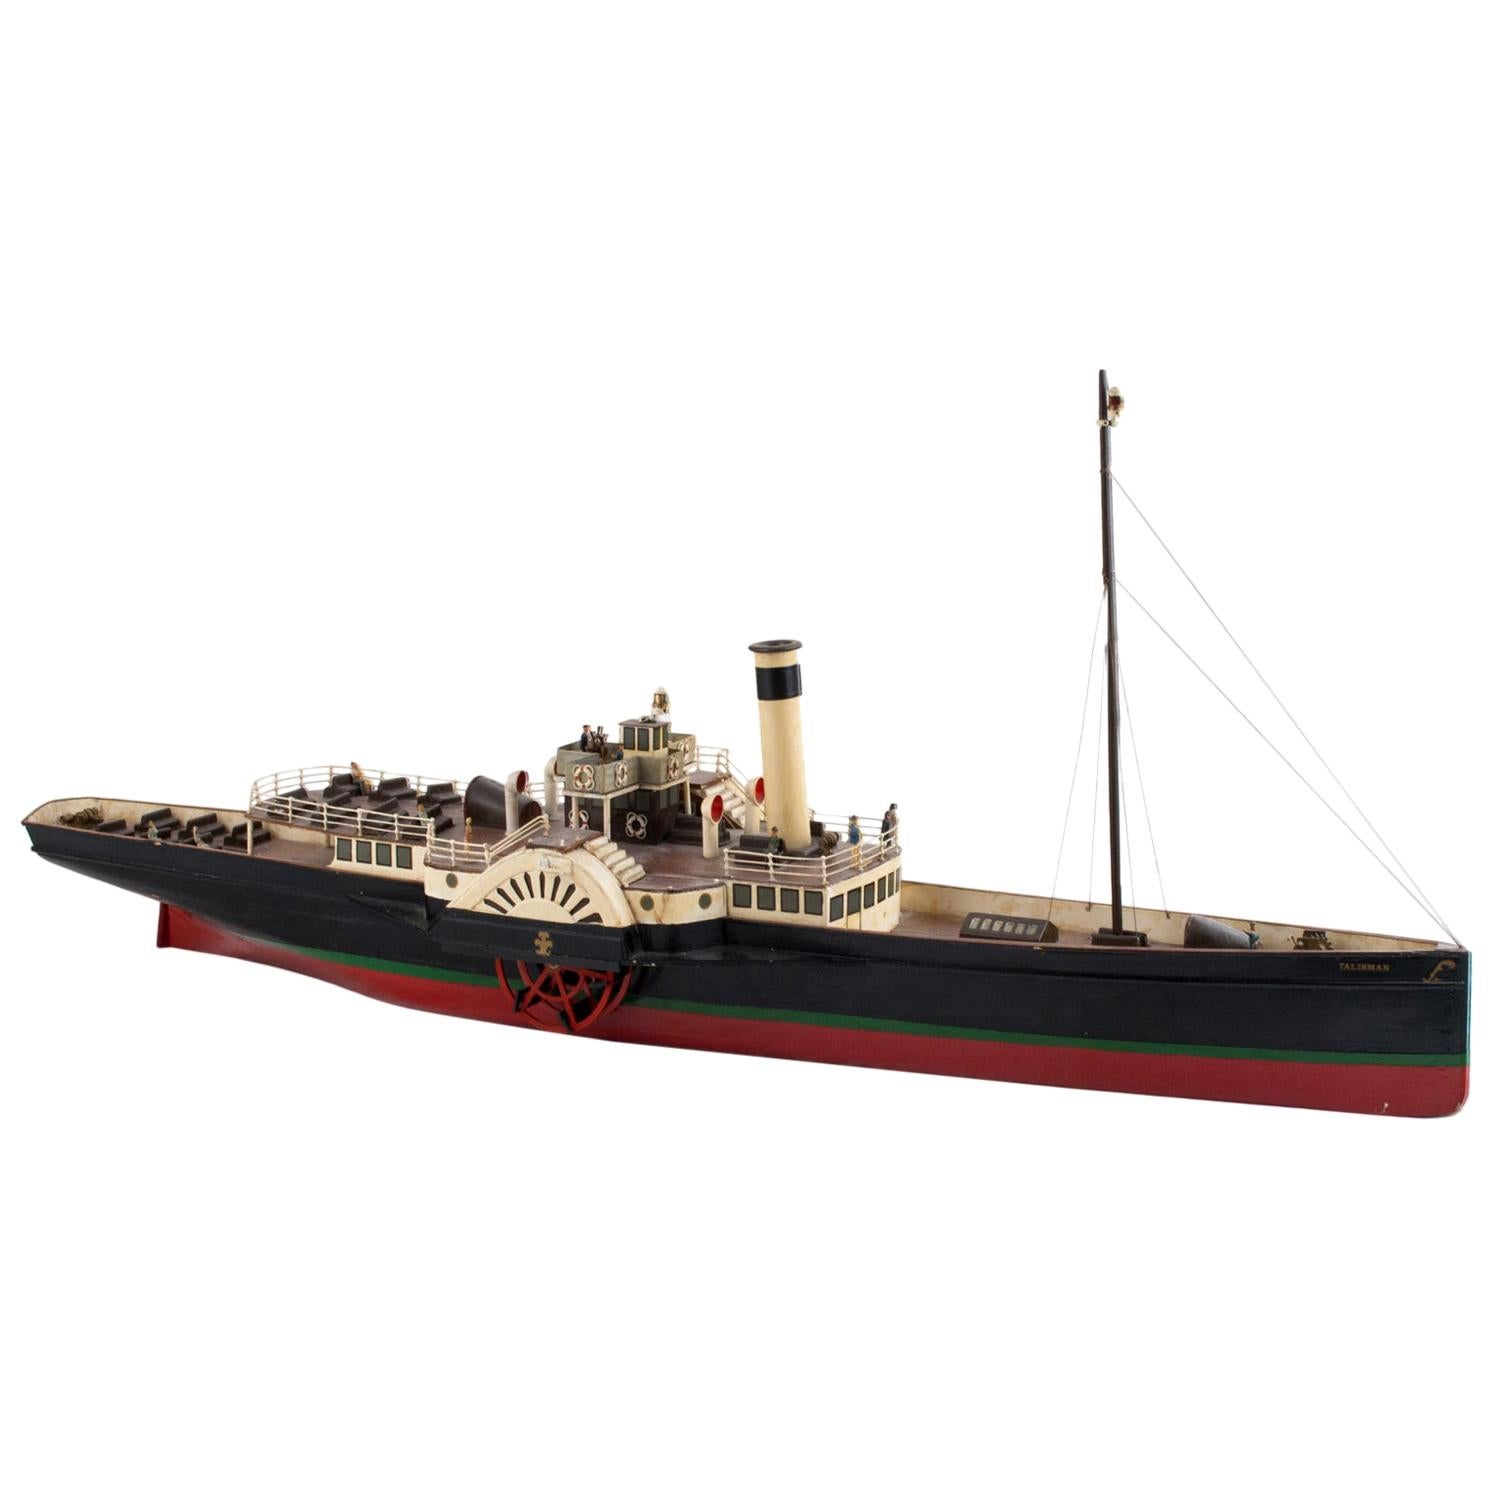 20th Century Side Wheeler Model Toy Boat